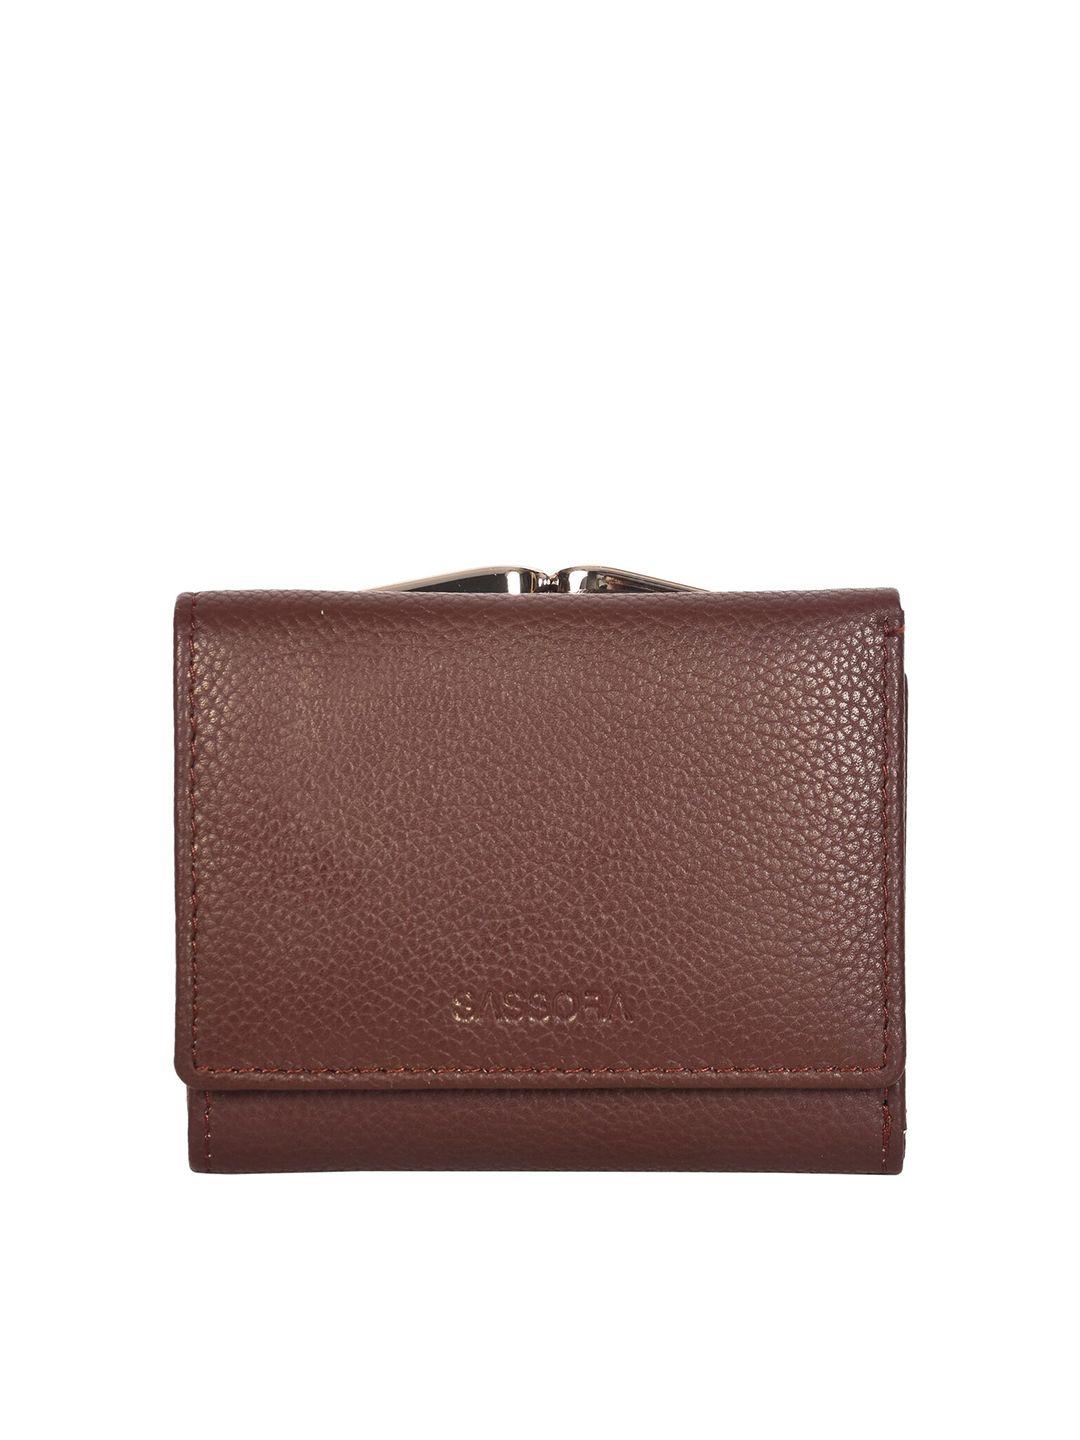 sassora men brown & gold-toned leather three fold wallet